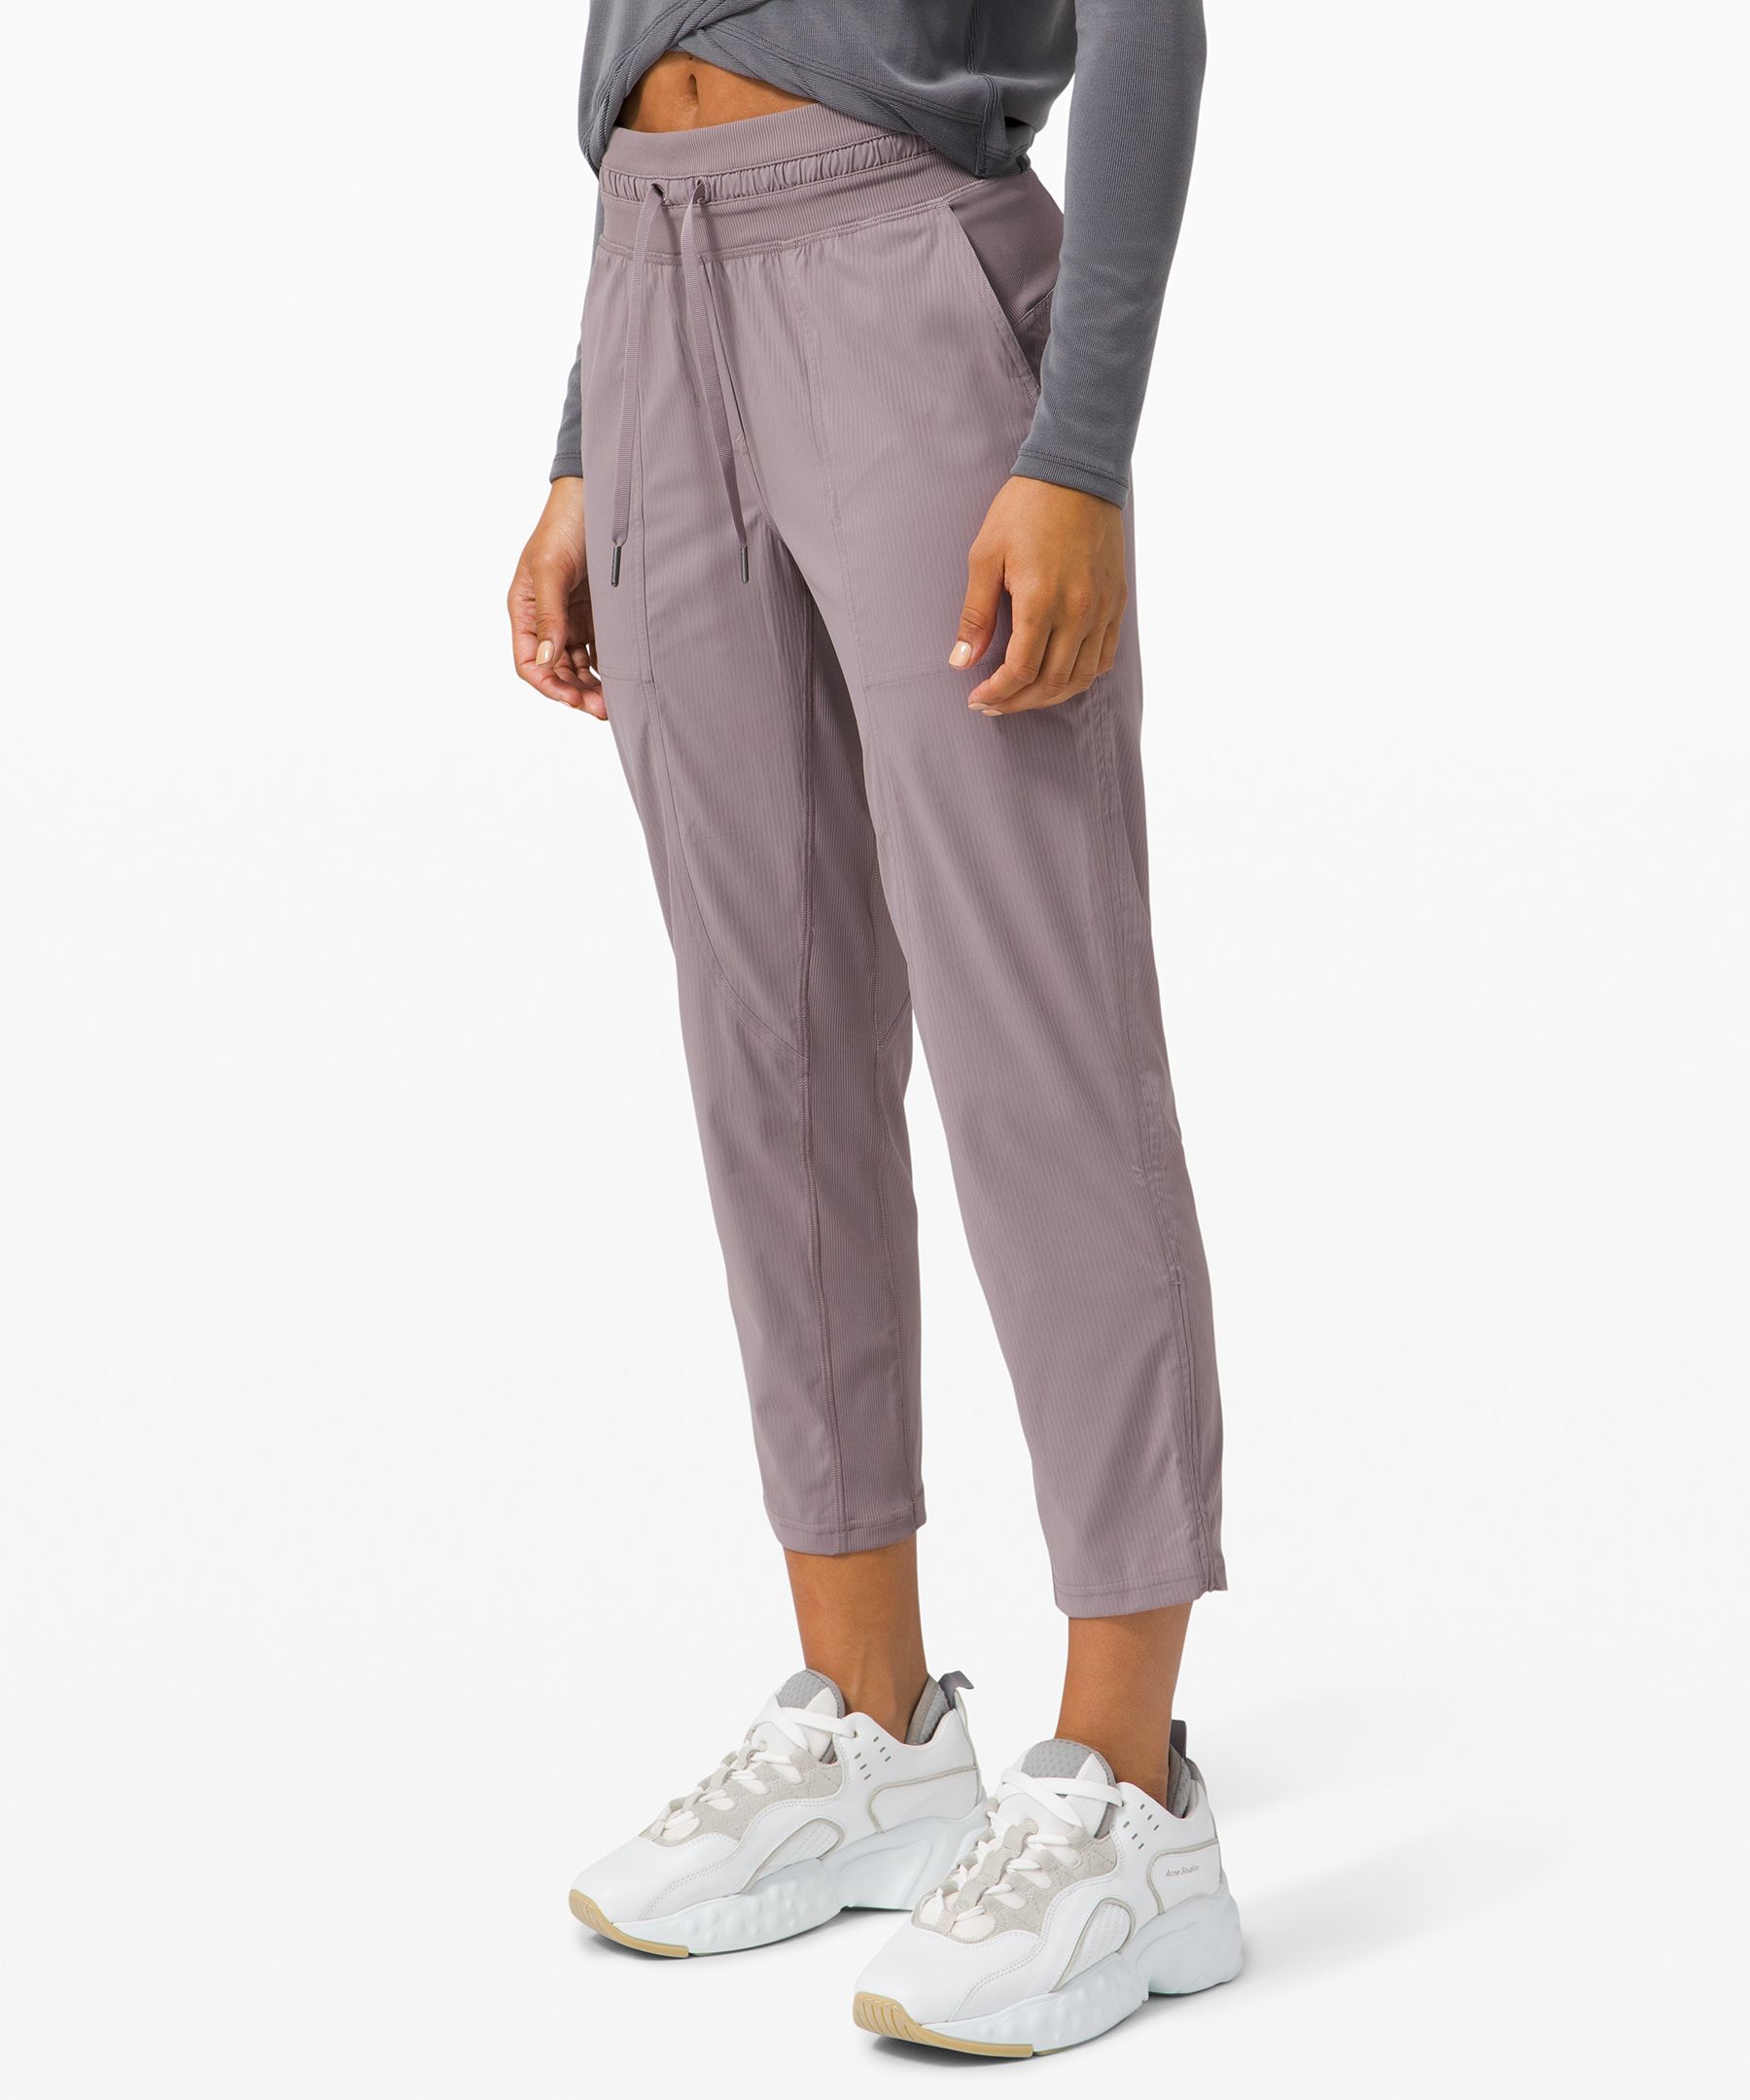 NWT Lululemon Dance Studio Crop / pants *25 - Athletic apparel